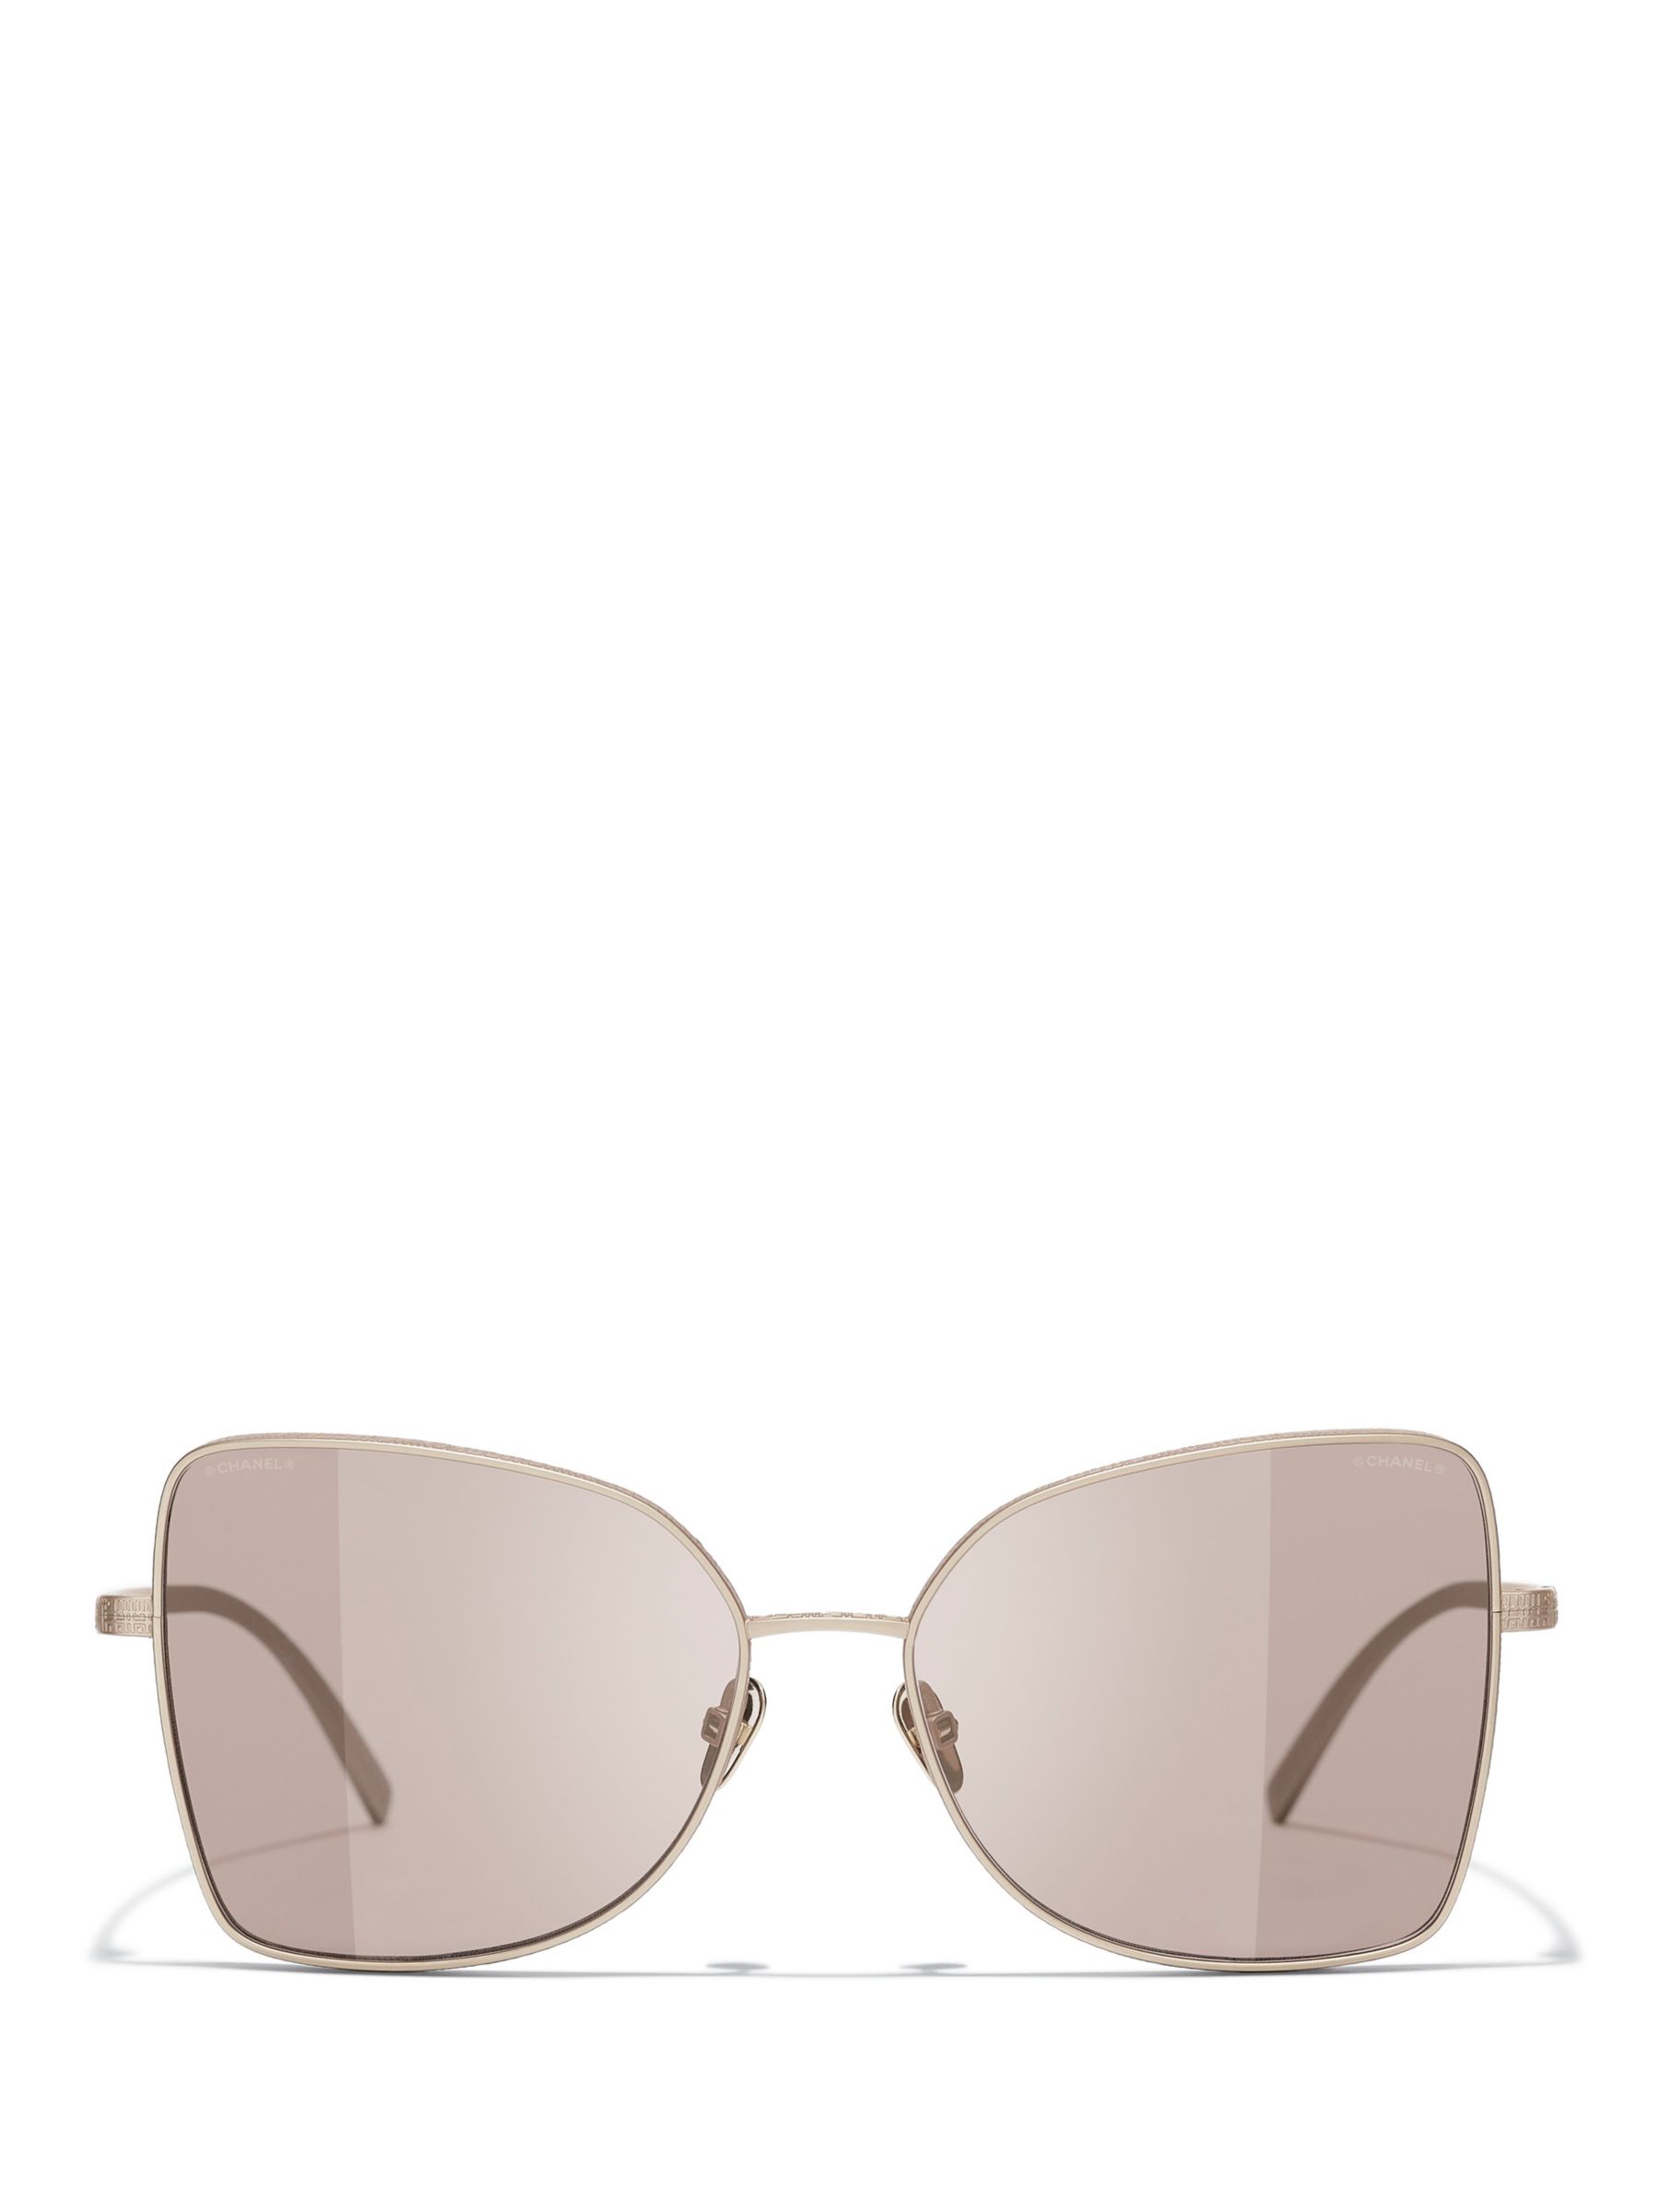 Buy CHANEL Irregular Sunglasses CH4263T Pale Gold/Beige Online at johnlewis.com